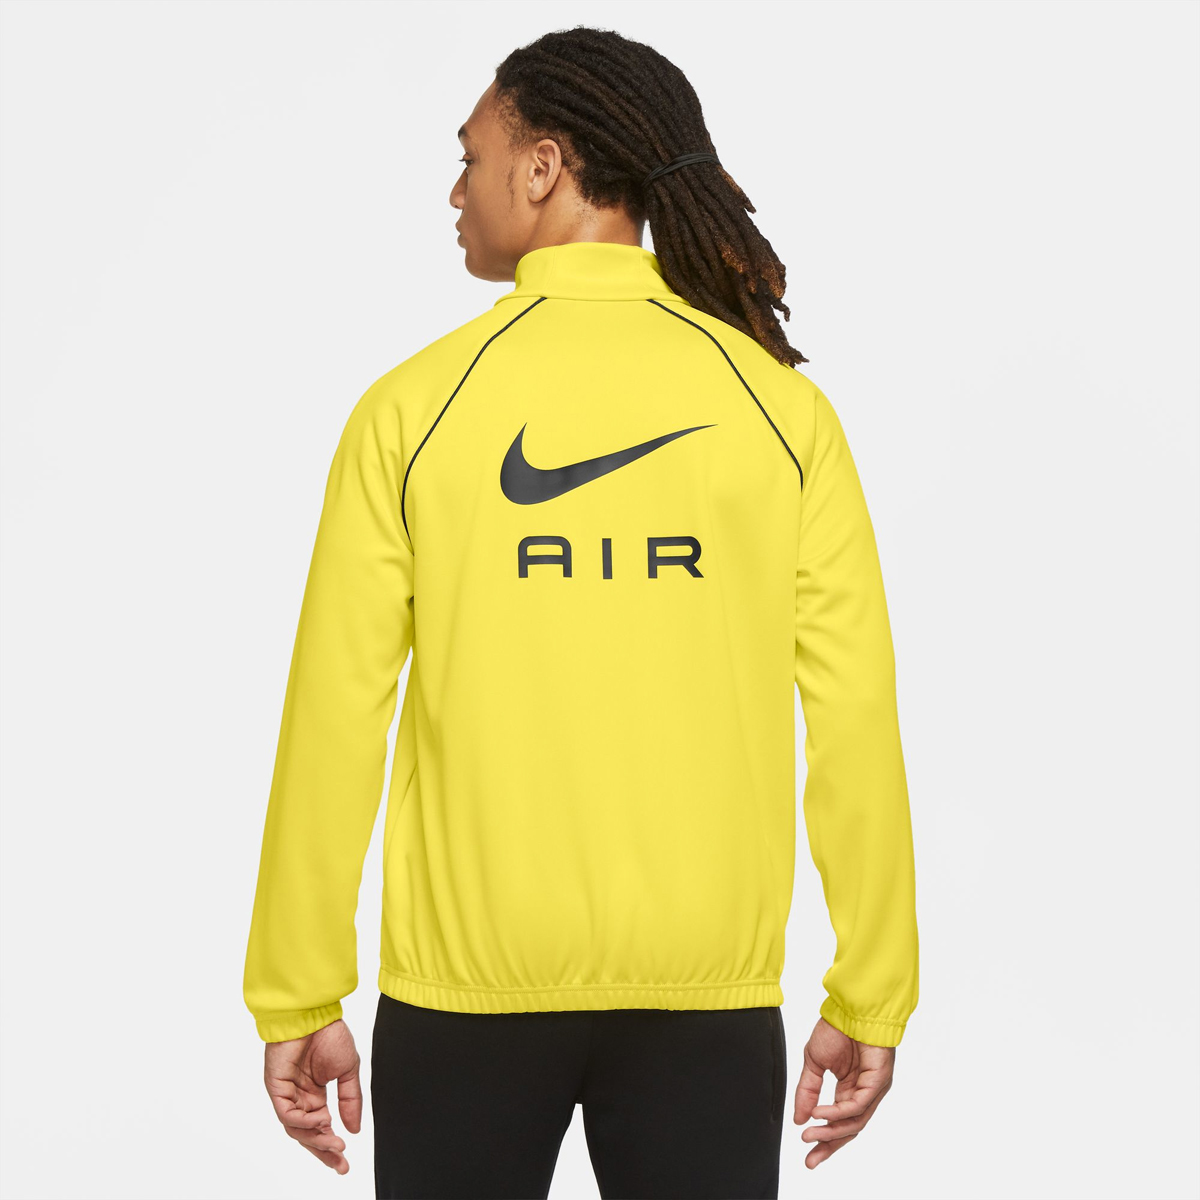 Nike-Air-Track-Jacket-Yellow-Strike-2